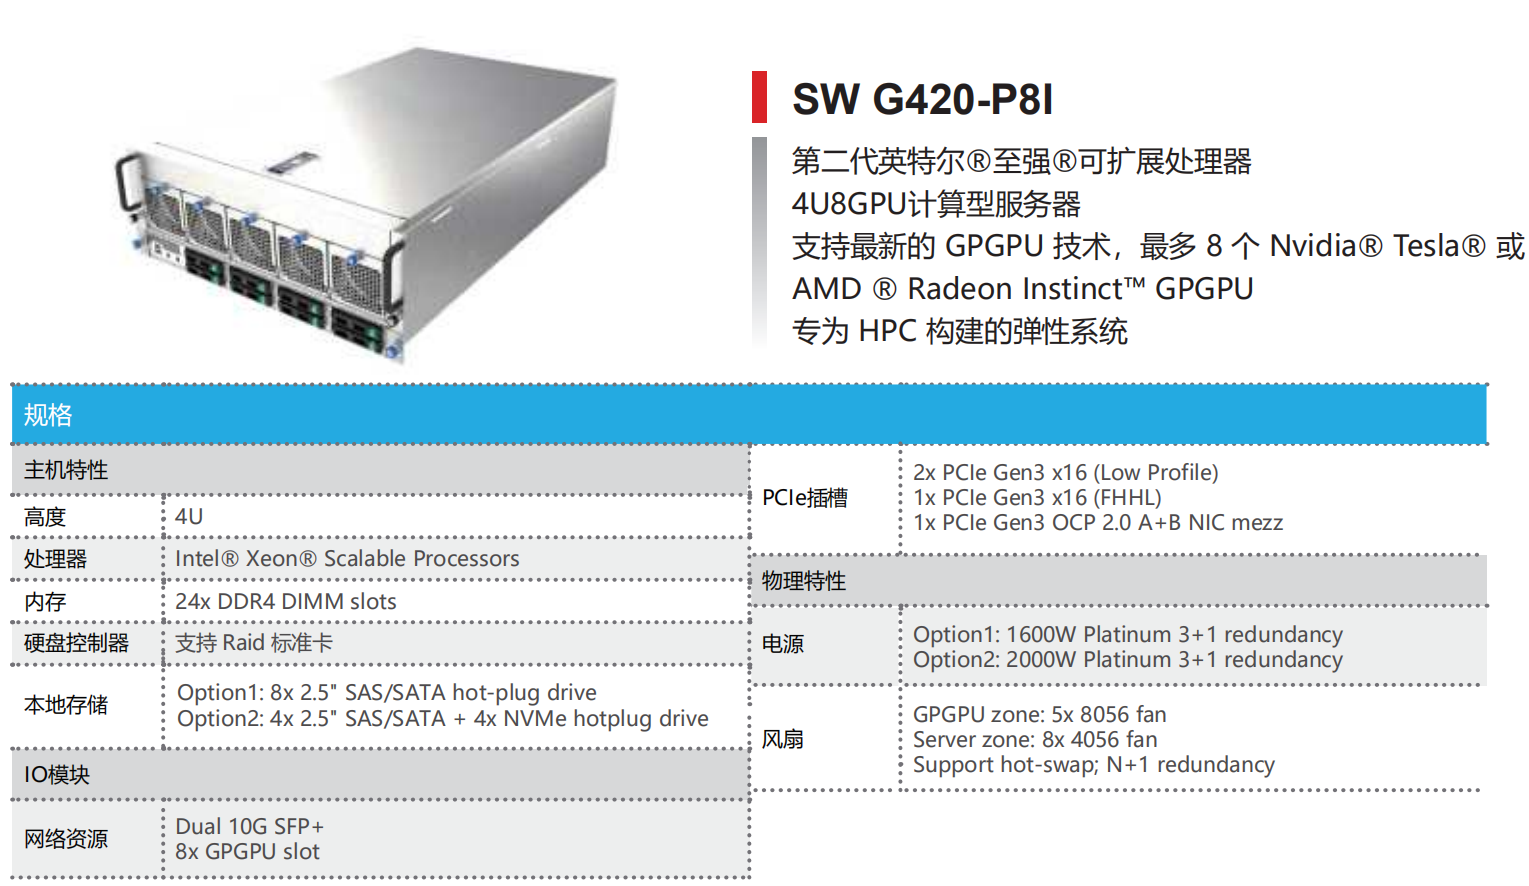 INTEL 平台 AI 服务器—SW G420-P8I